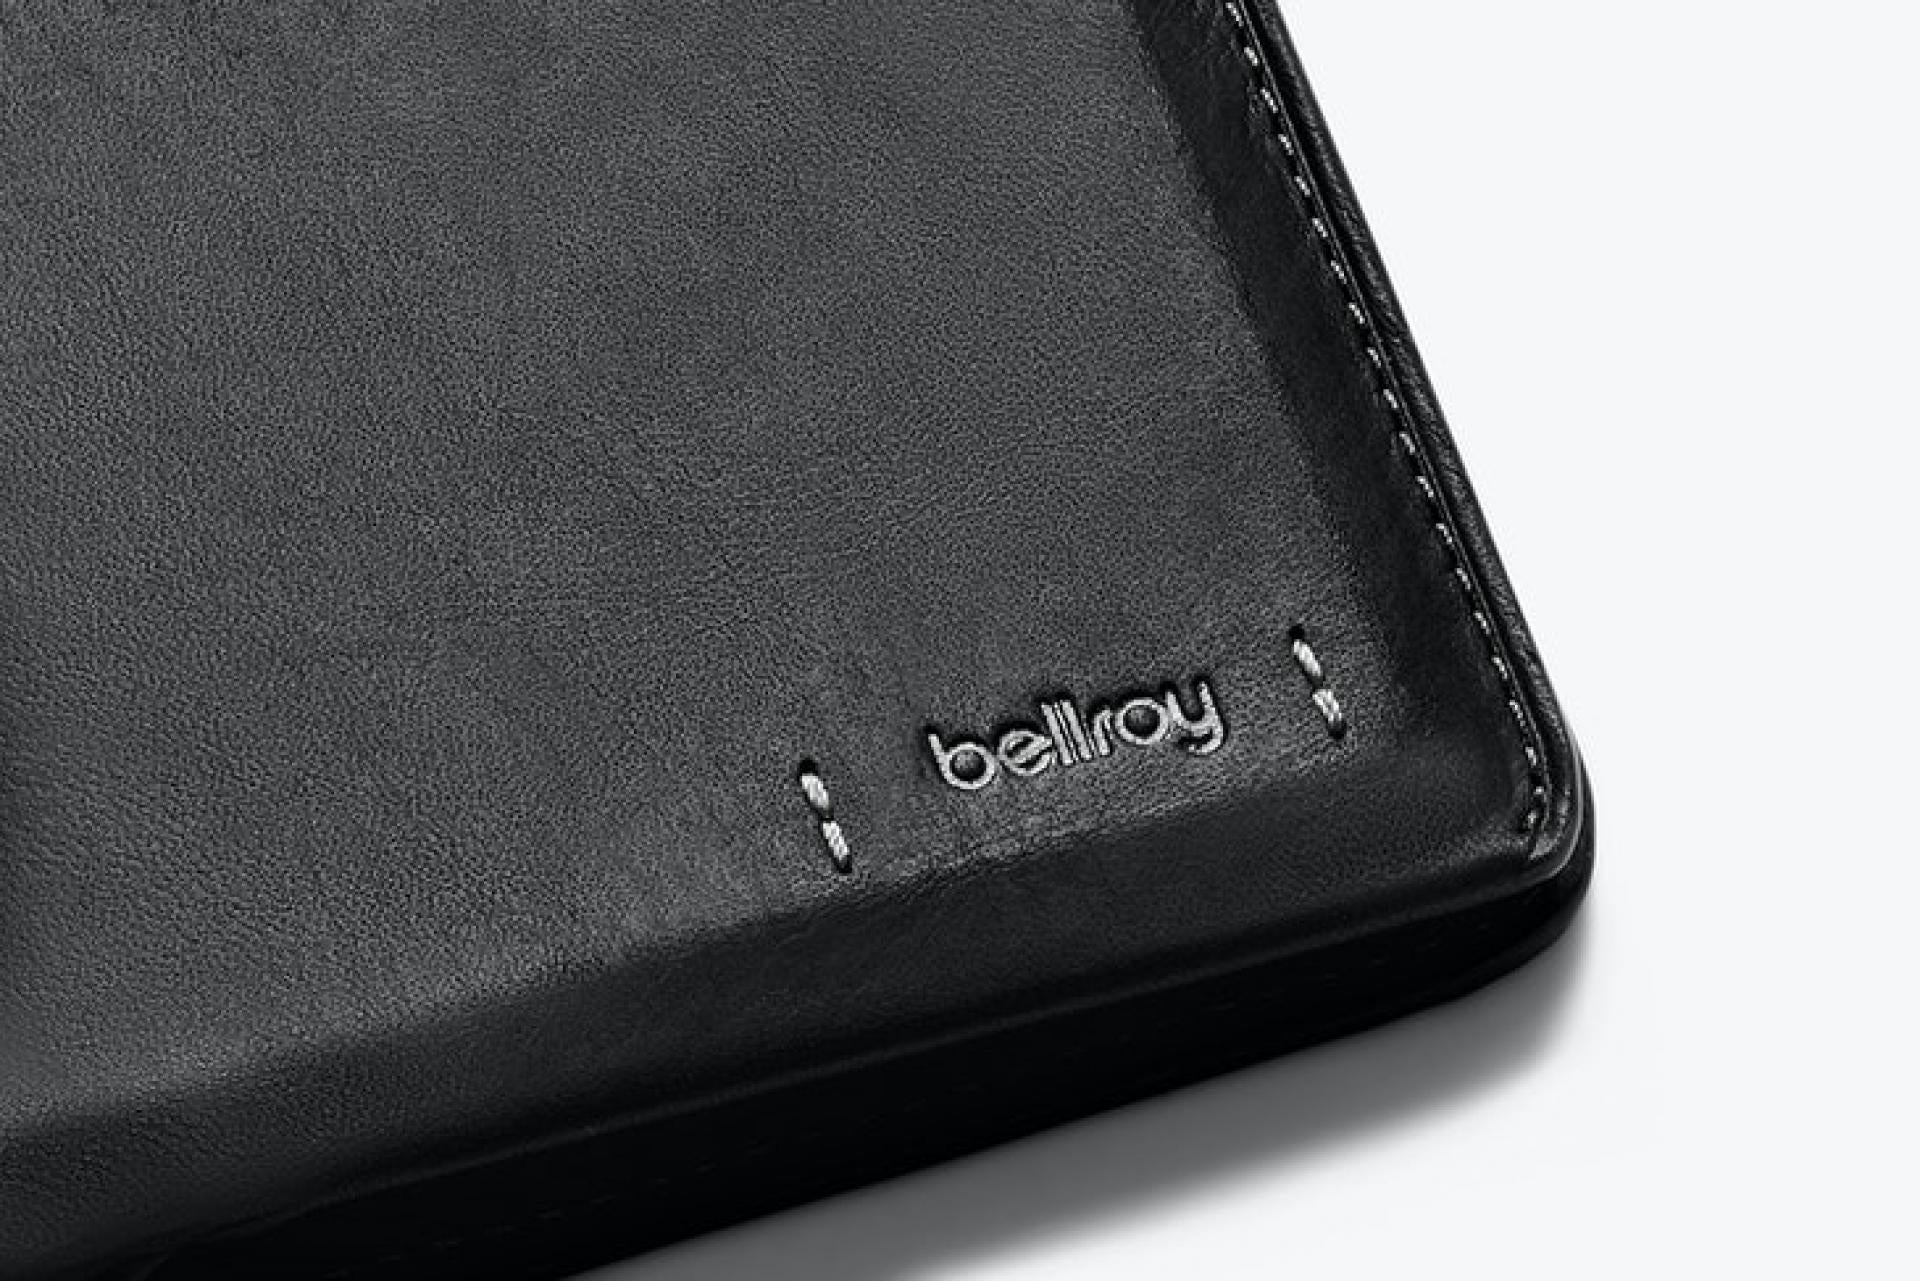 Bellroy Note Sleeve Premium Black